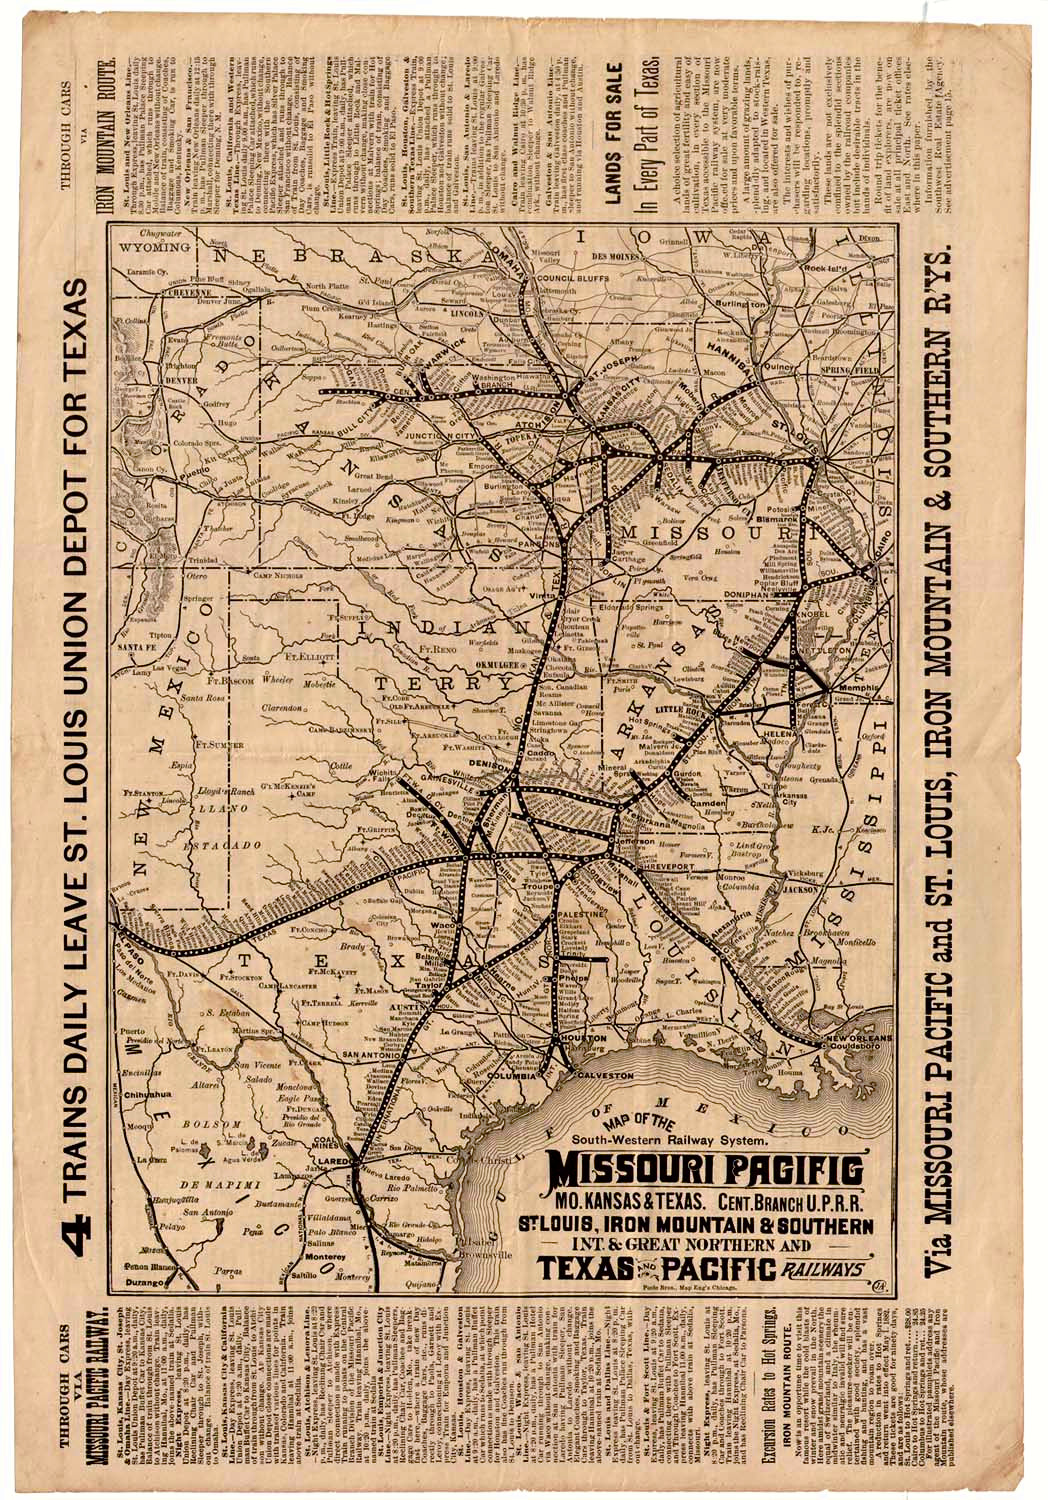 (Southwest - Texas) Missouri Pacific